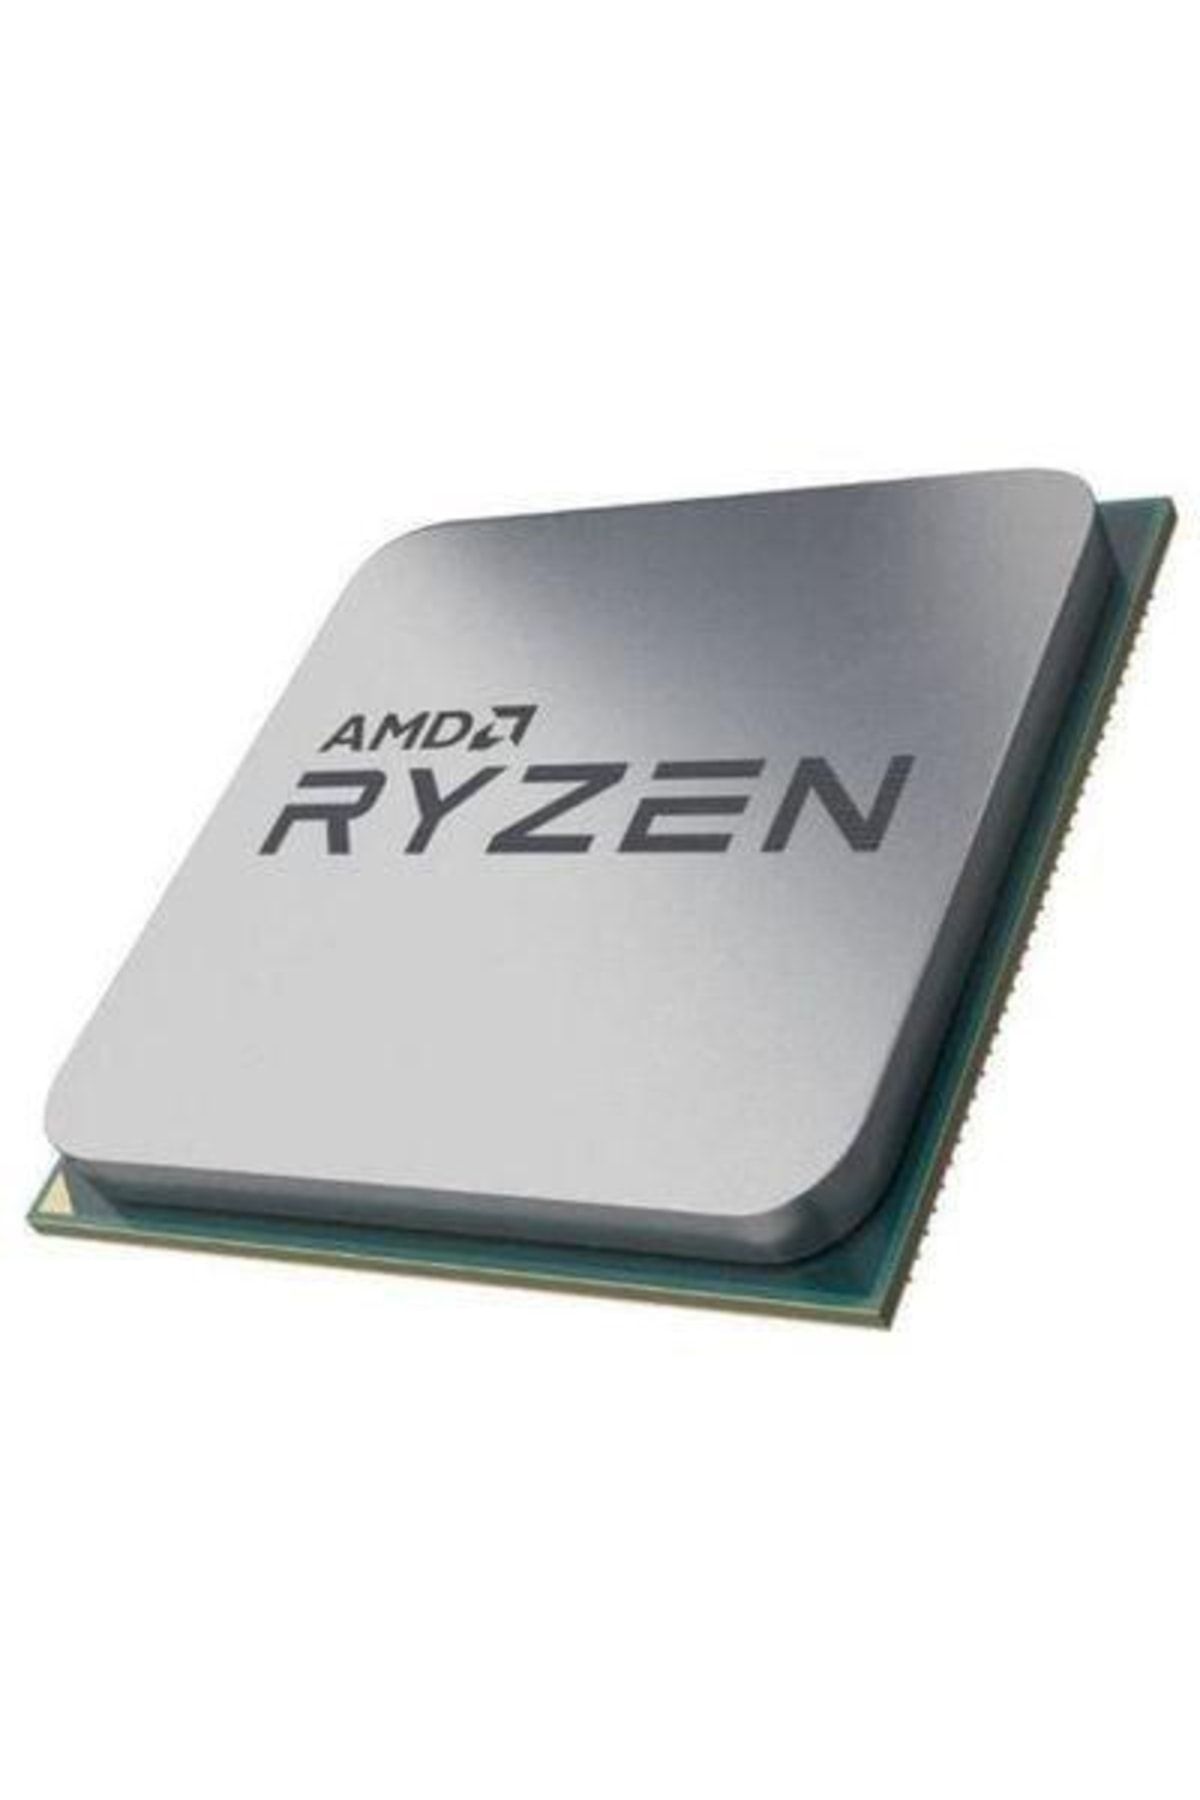 Ryzen 5600 am4. Процессор AMD Ryzen 5 5600x. Процессор sam4 AMD Ryzen 3 3200g Tray. AMD a6-9400 OEM. Процессор AMD Ryzen 7 Pro 3700 3600 МГЦ TDP 65вт OEM.